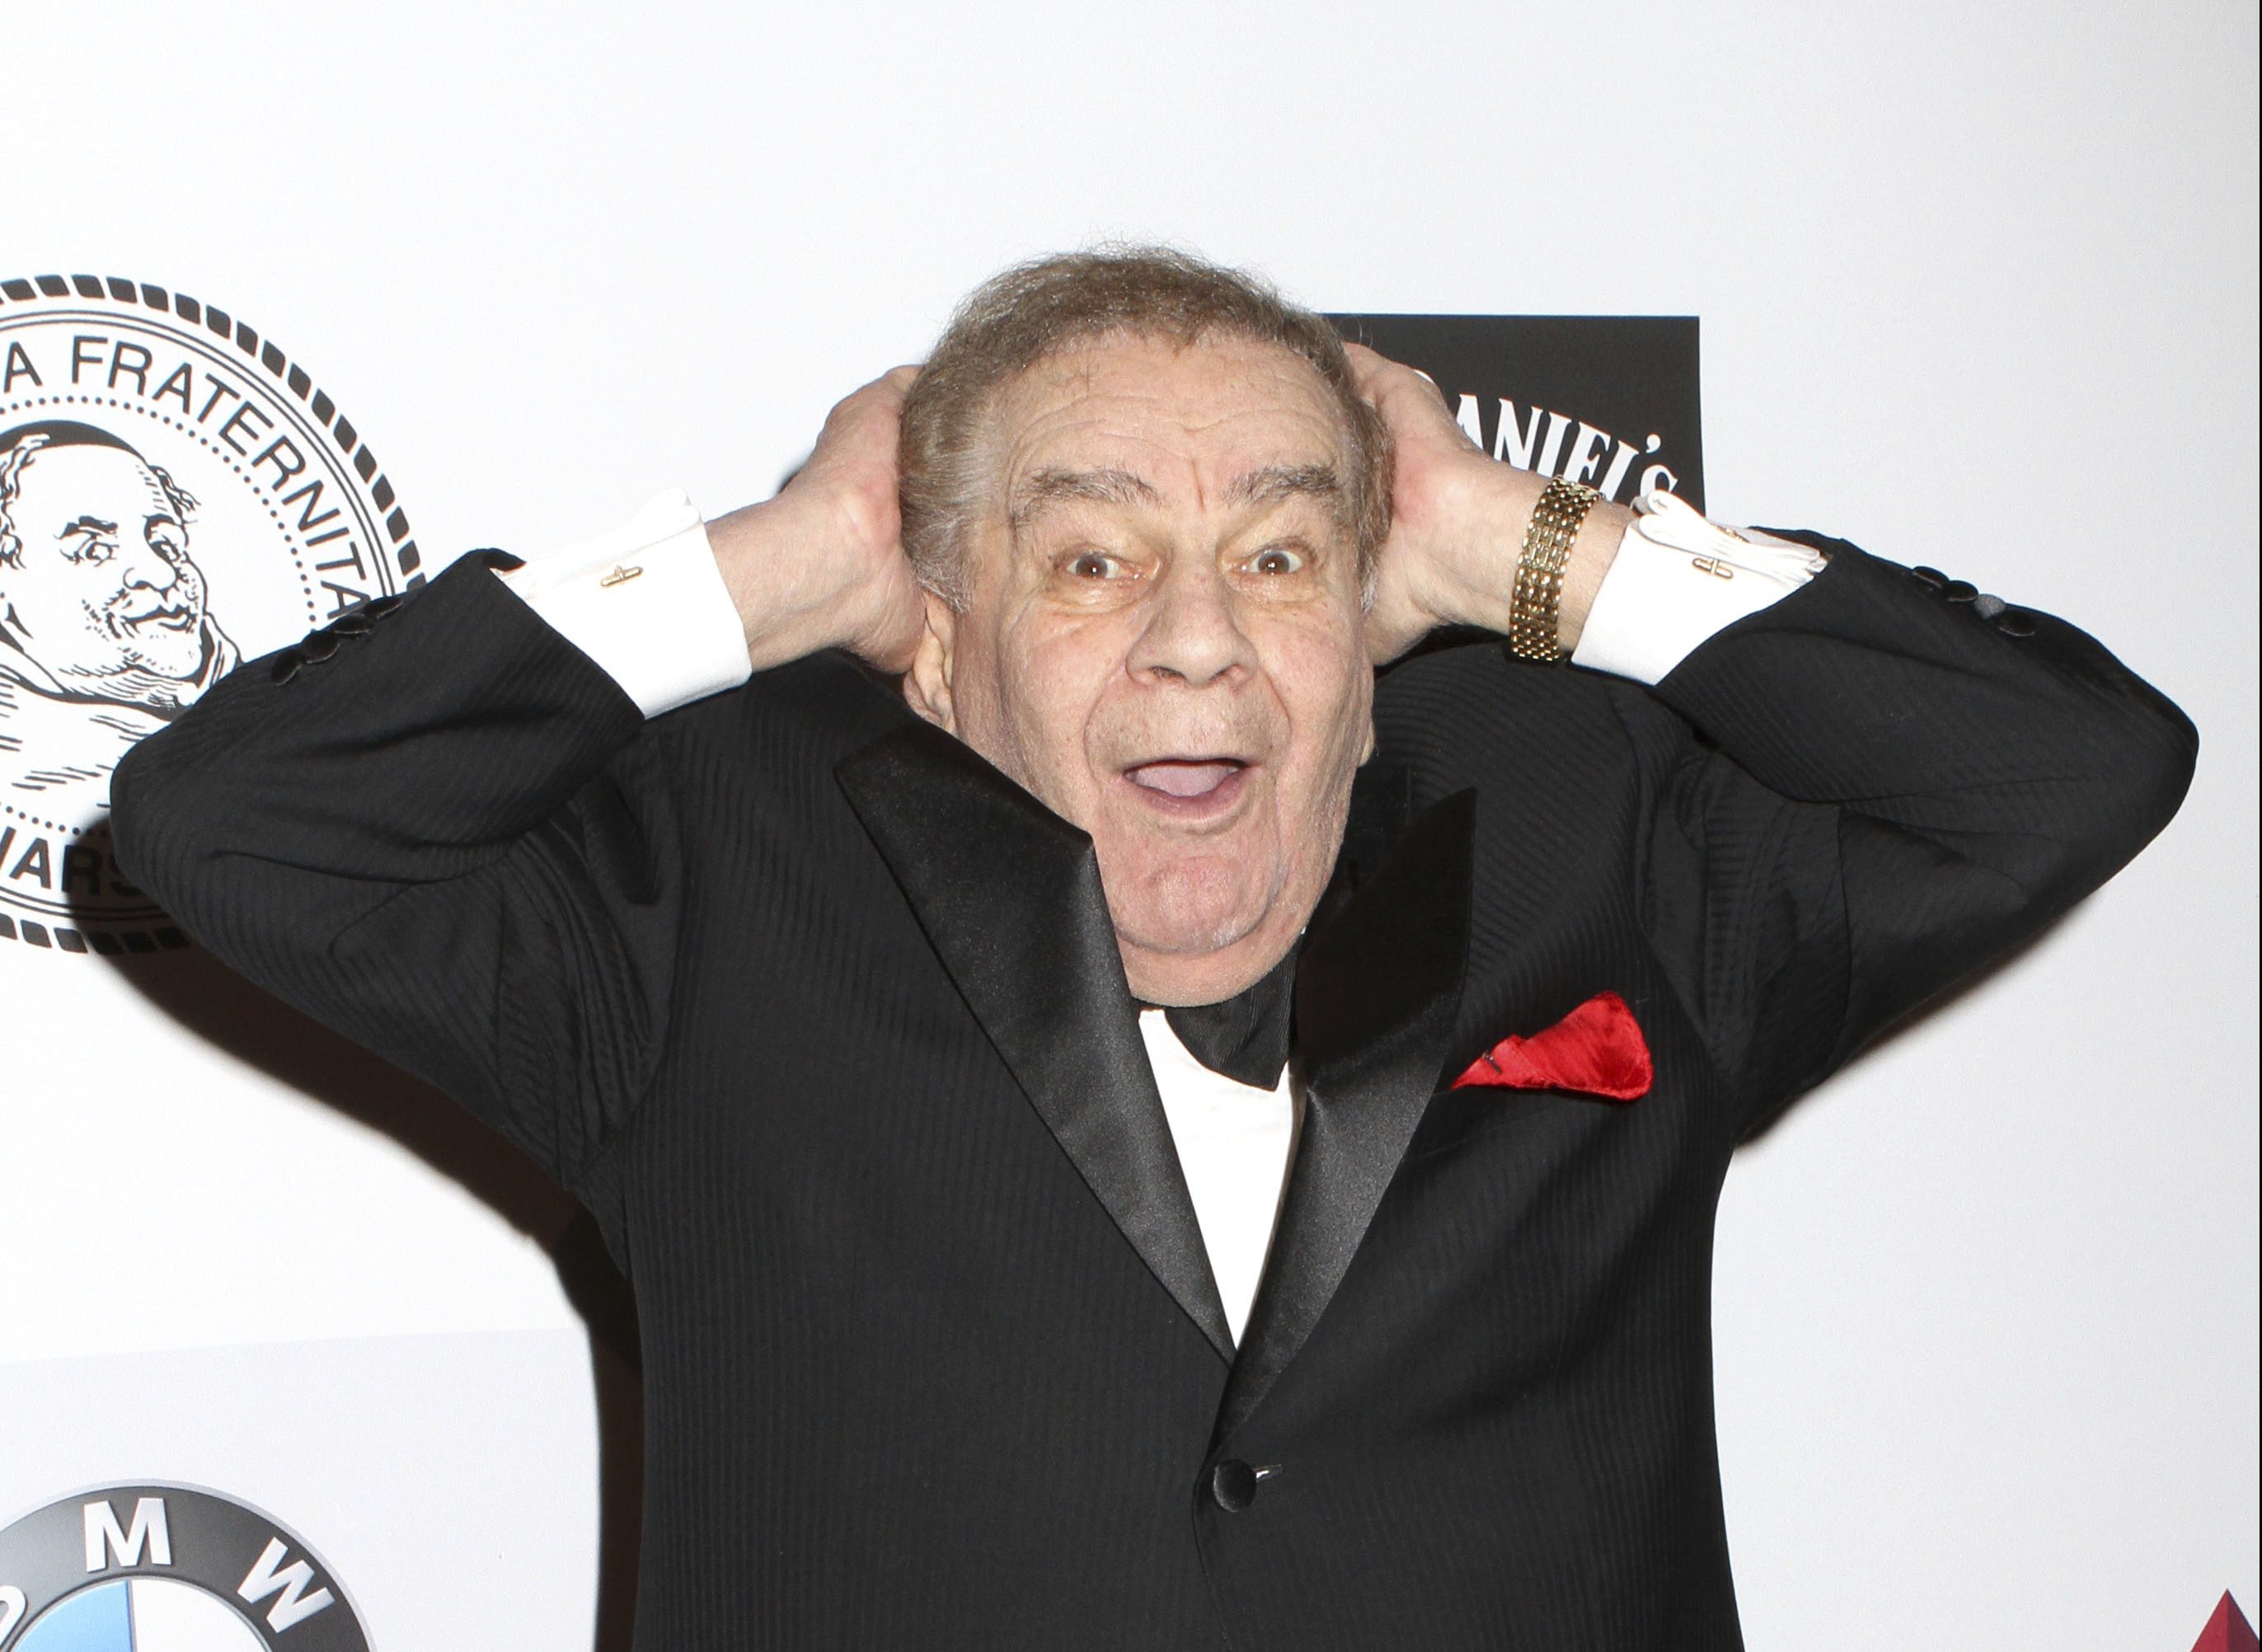 Borscht Belt comedian Freddie Roman dies at 85: ‘The ultimate pro’